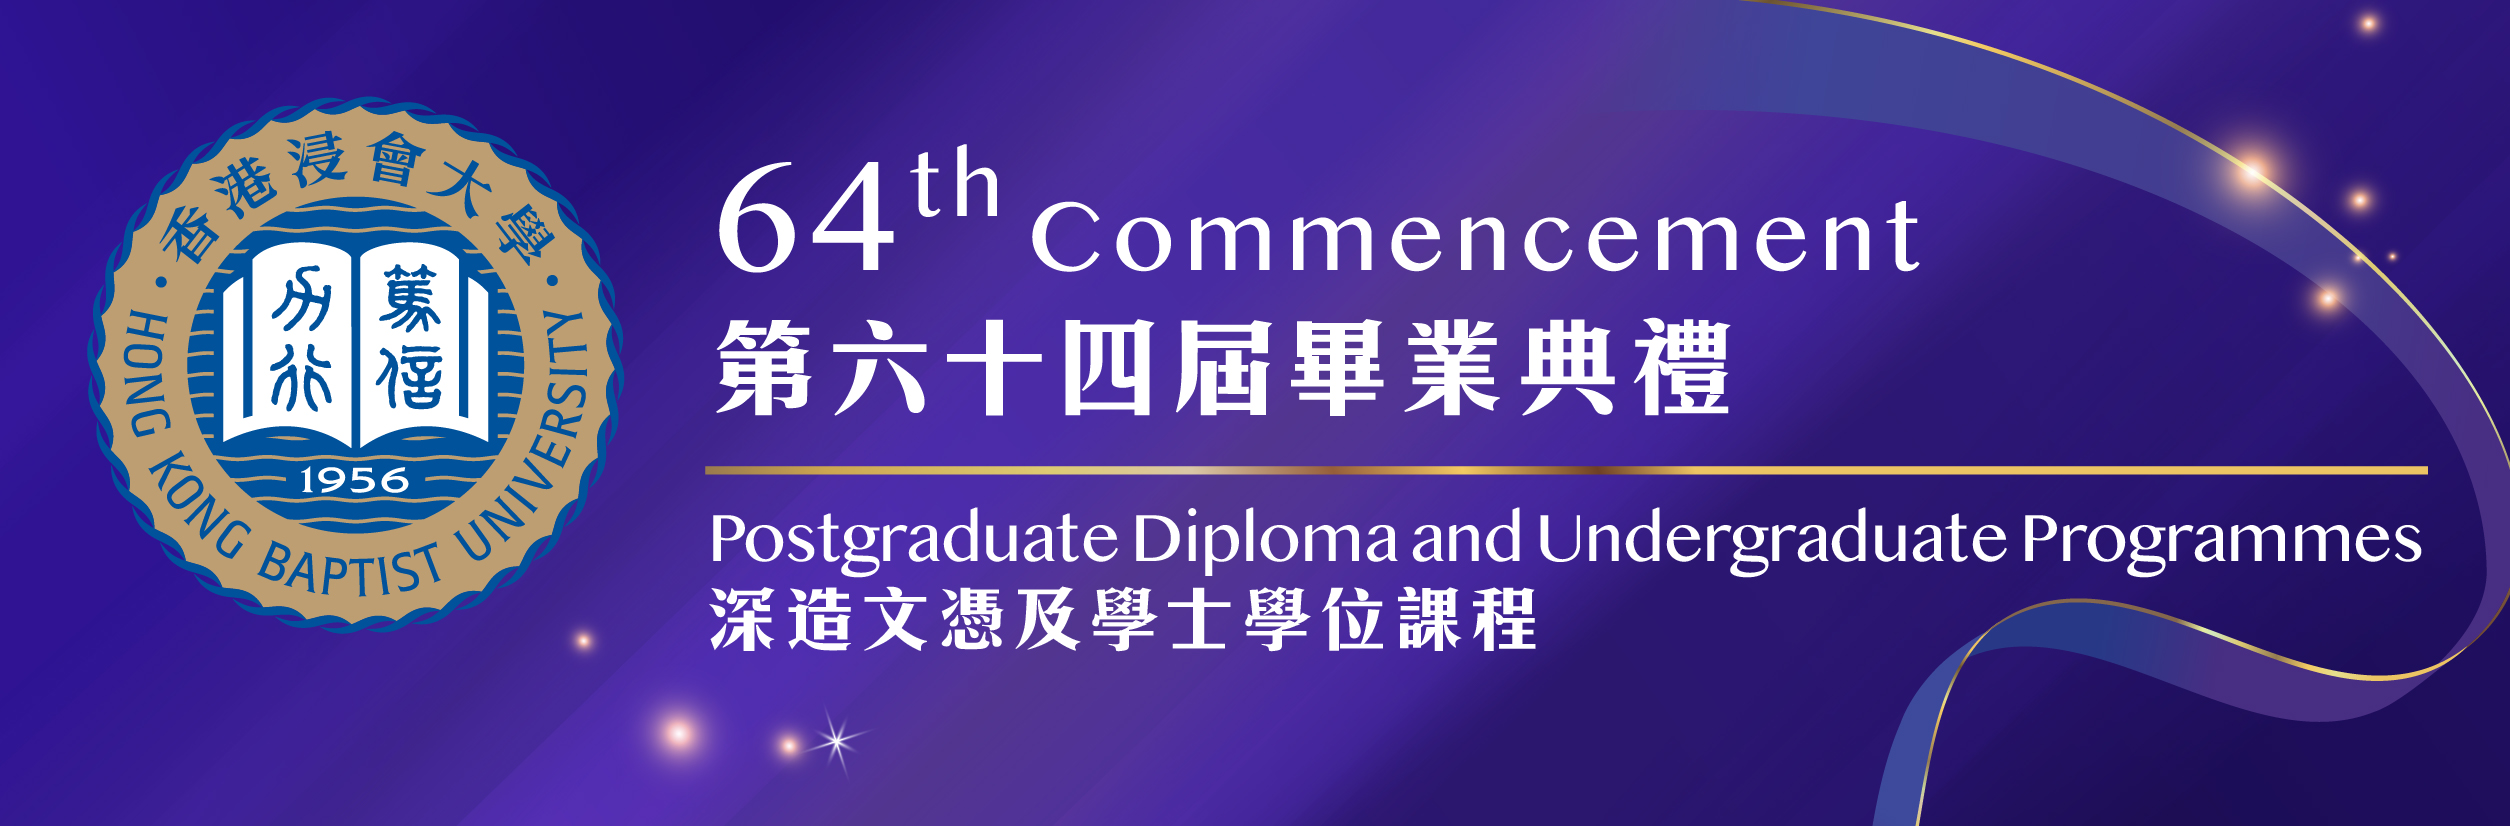 HKBU 64th Commencement - Postgraduate Diploma and Undergraduate Programmes